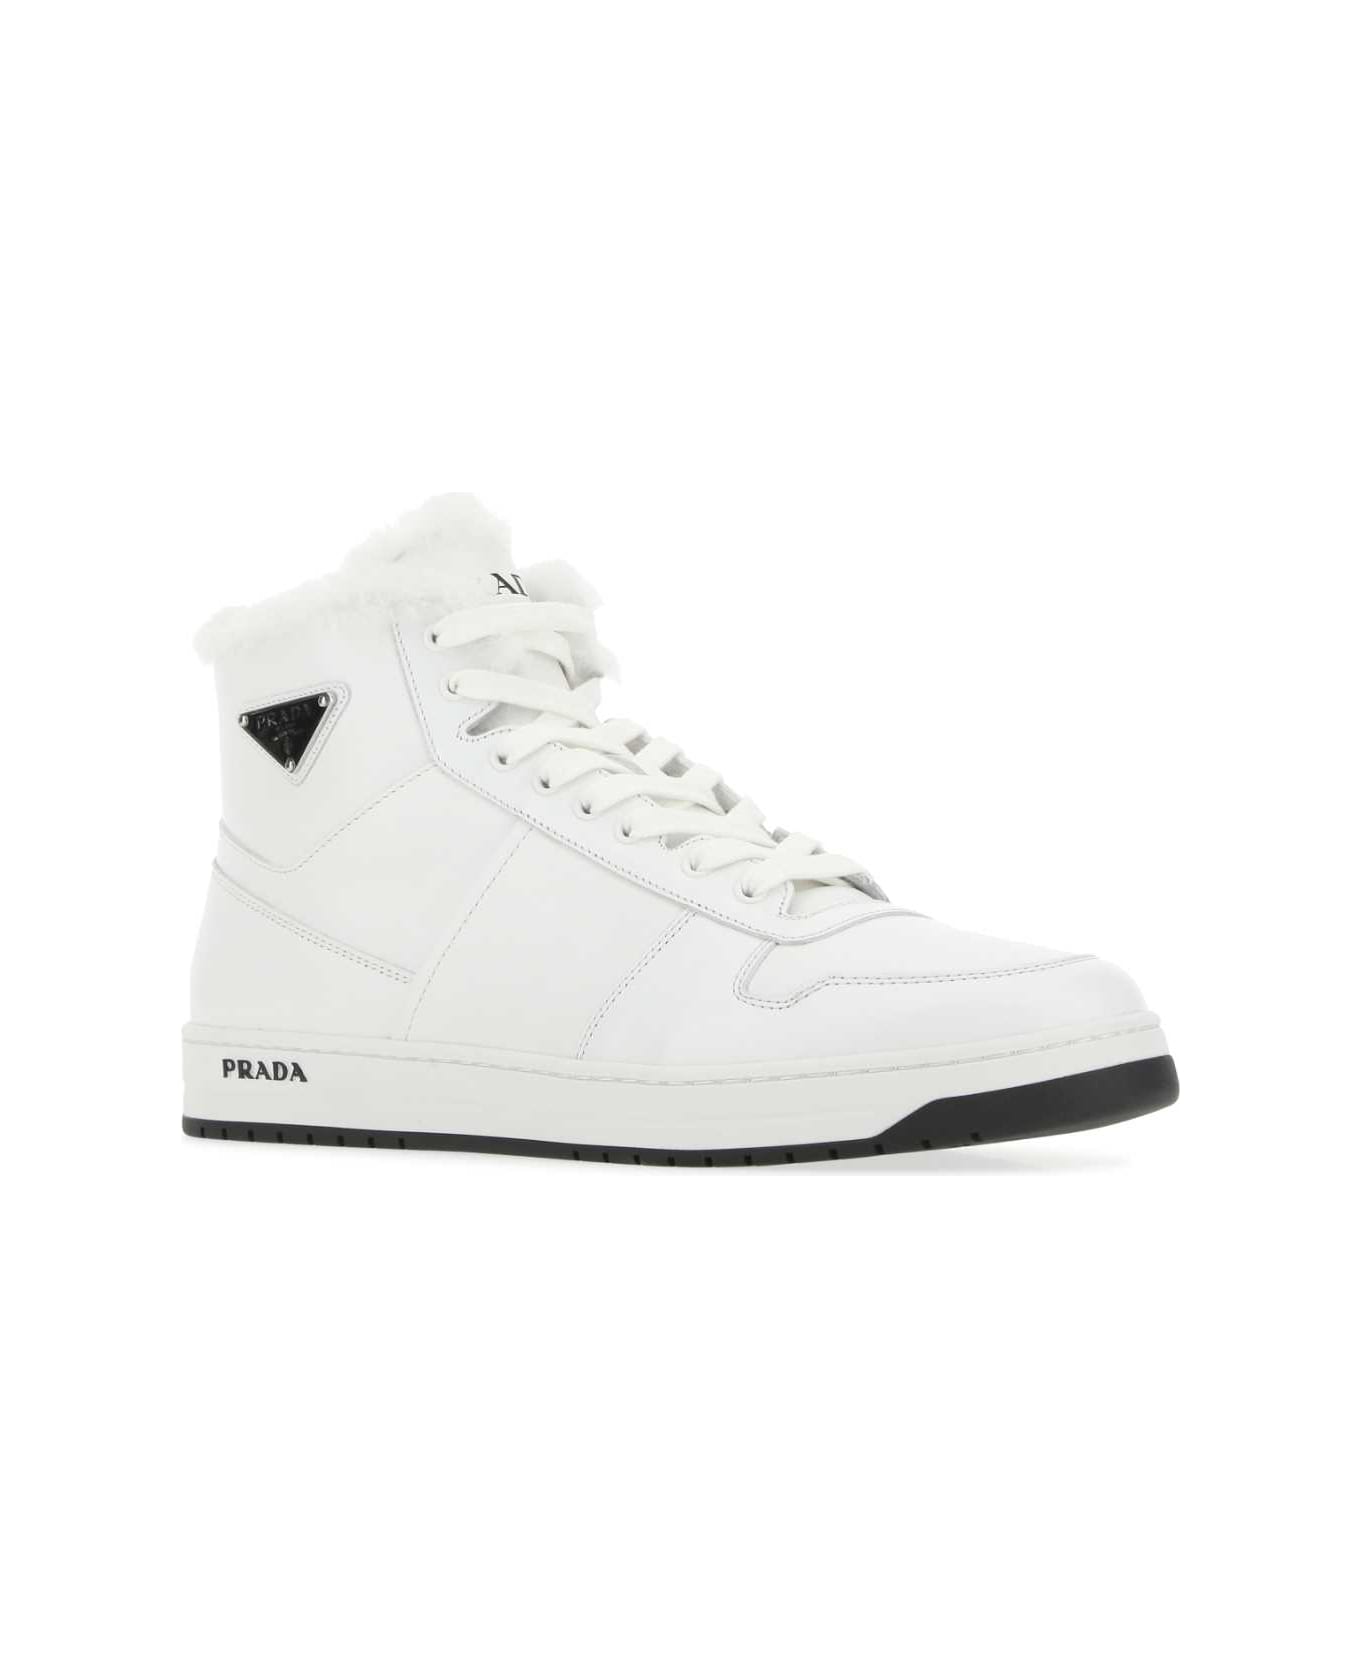 Prada White Leather Sneakers - F0009 スニーカー